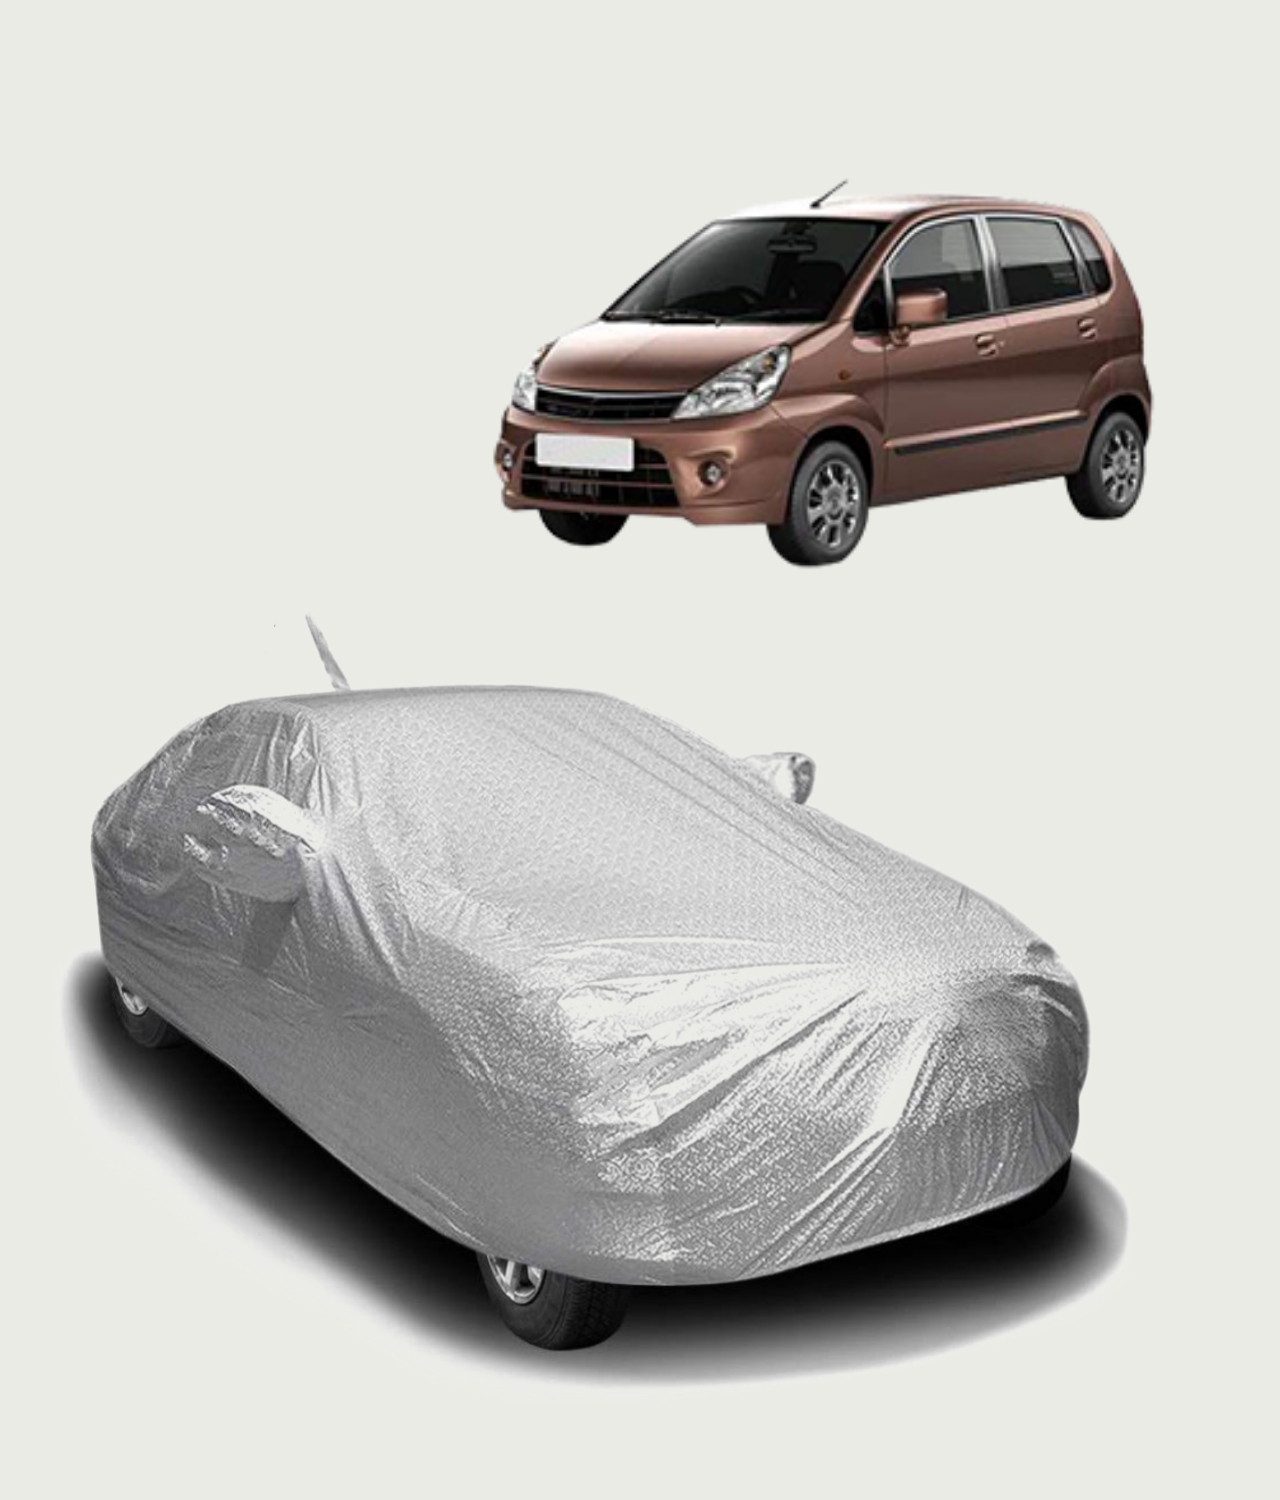 Hyundai Eon Car Cover - Indoor Car Cover (Silver) - Nellai Tarpaulin